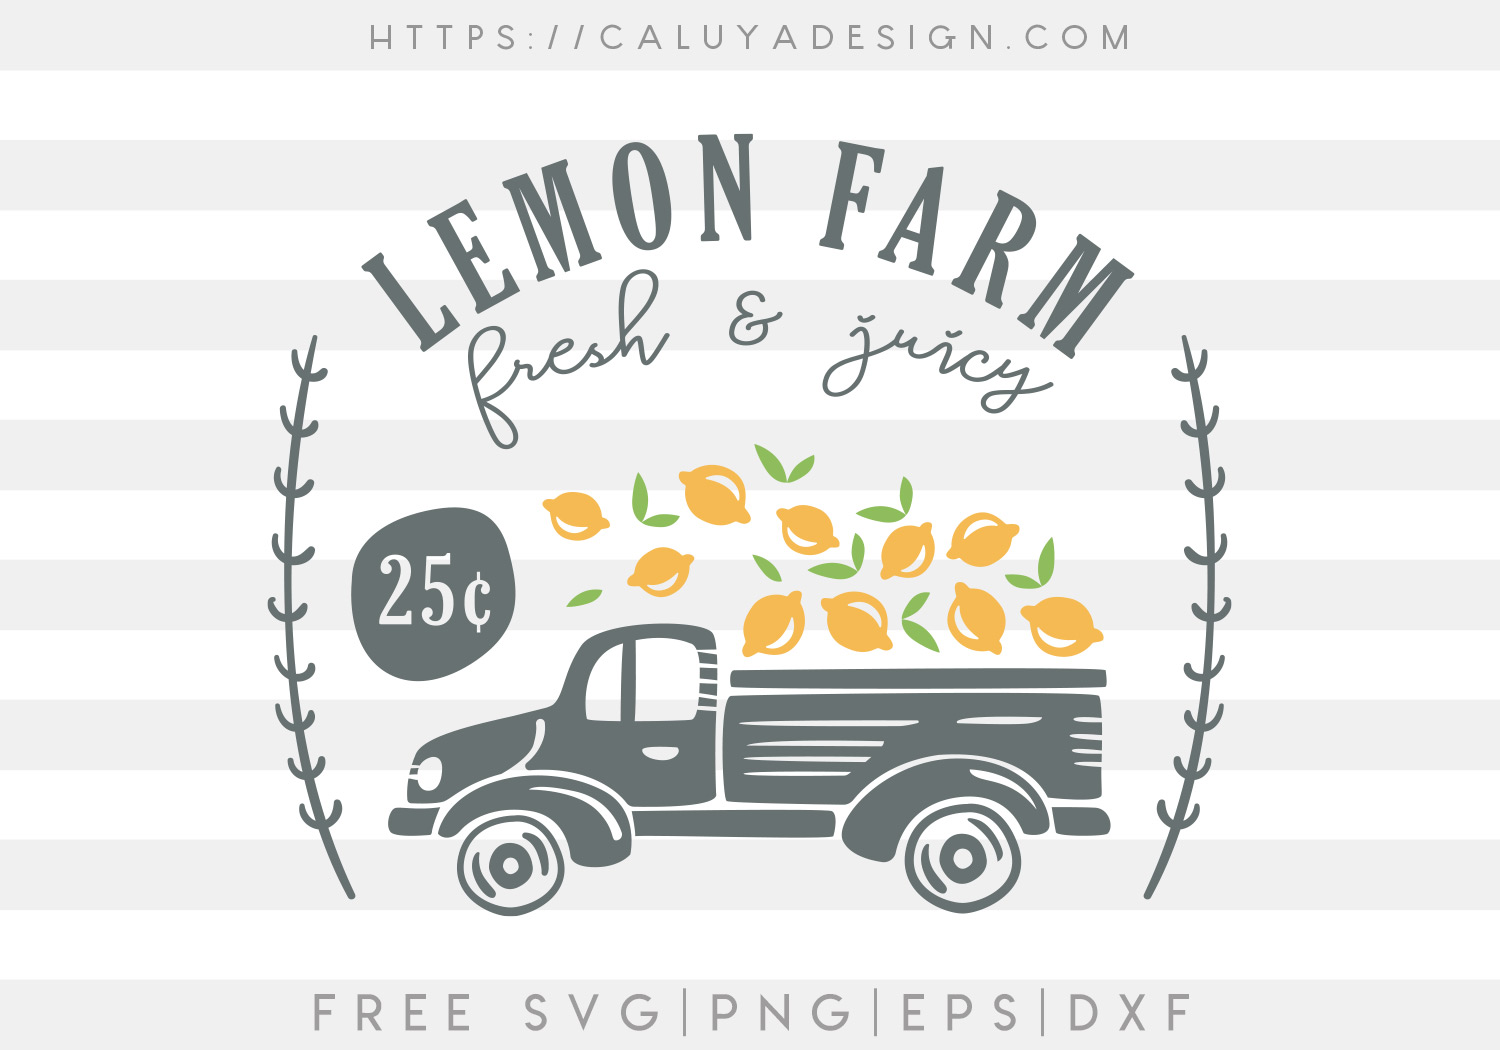 Lemon Farm SVG, PNG, EPS & DXF